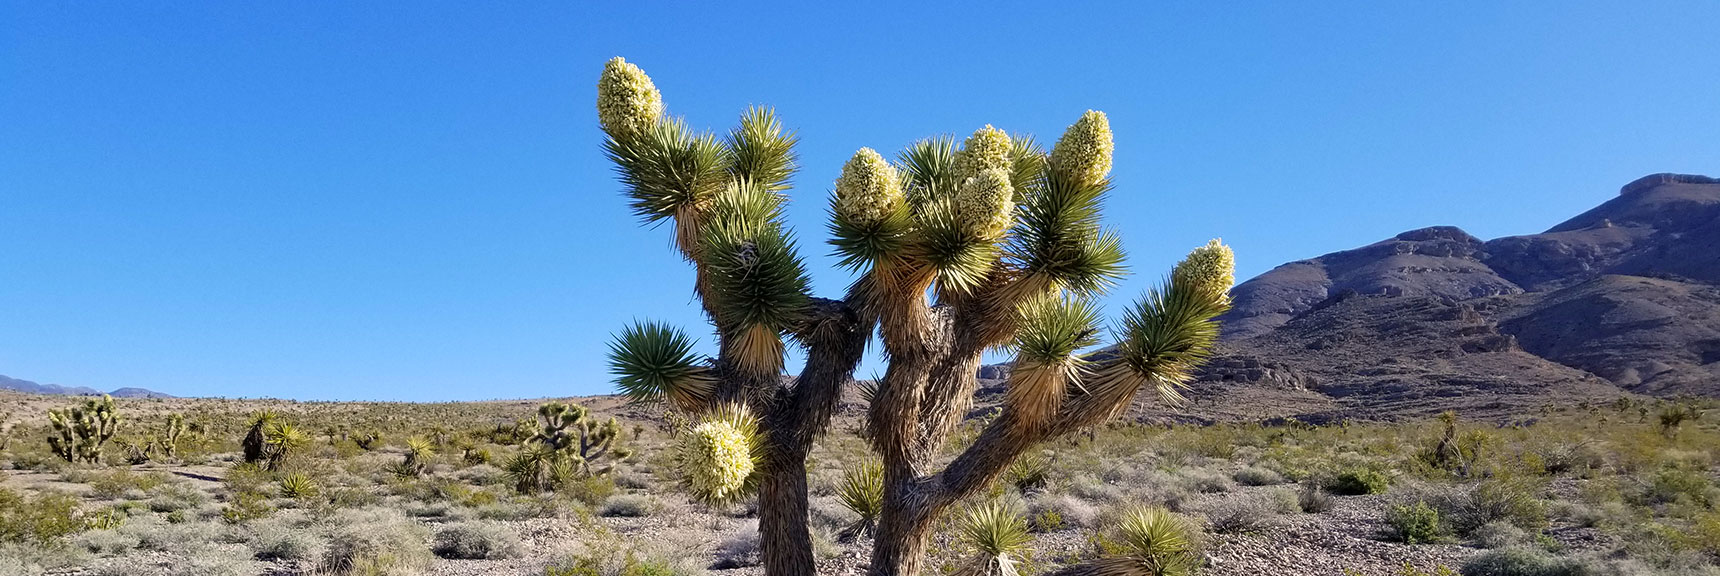 Joshua Tree West of Gass Peak, Nevada